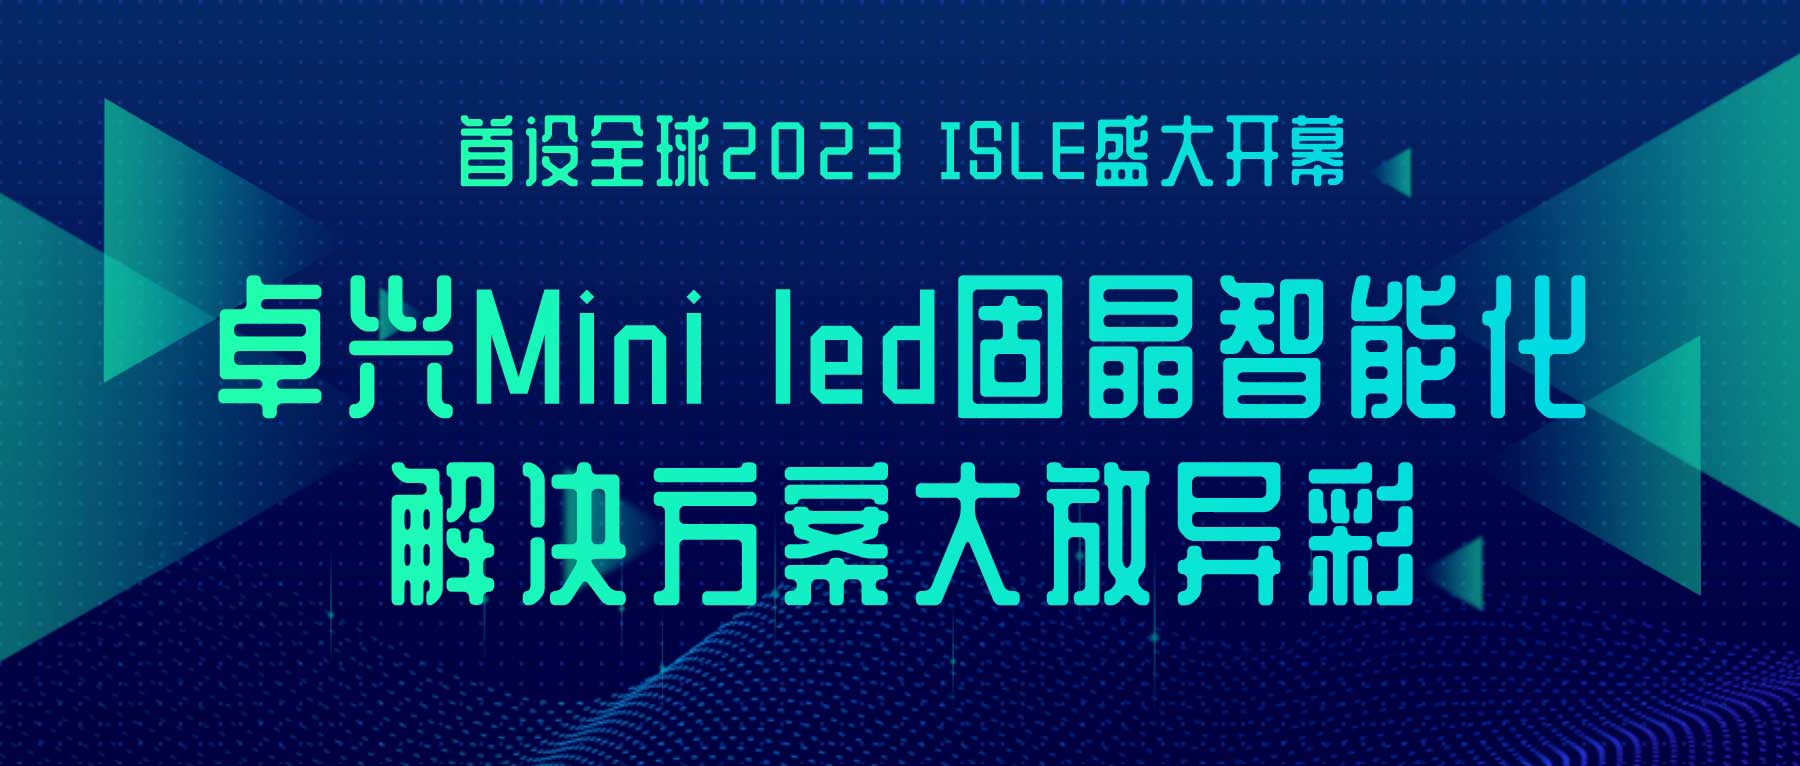 2023 ISLE盛大开幕，卓兴Mini led固晶智能化解决方案大放异彩